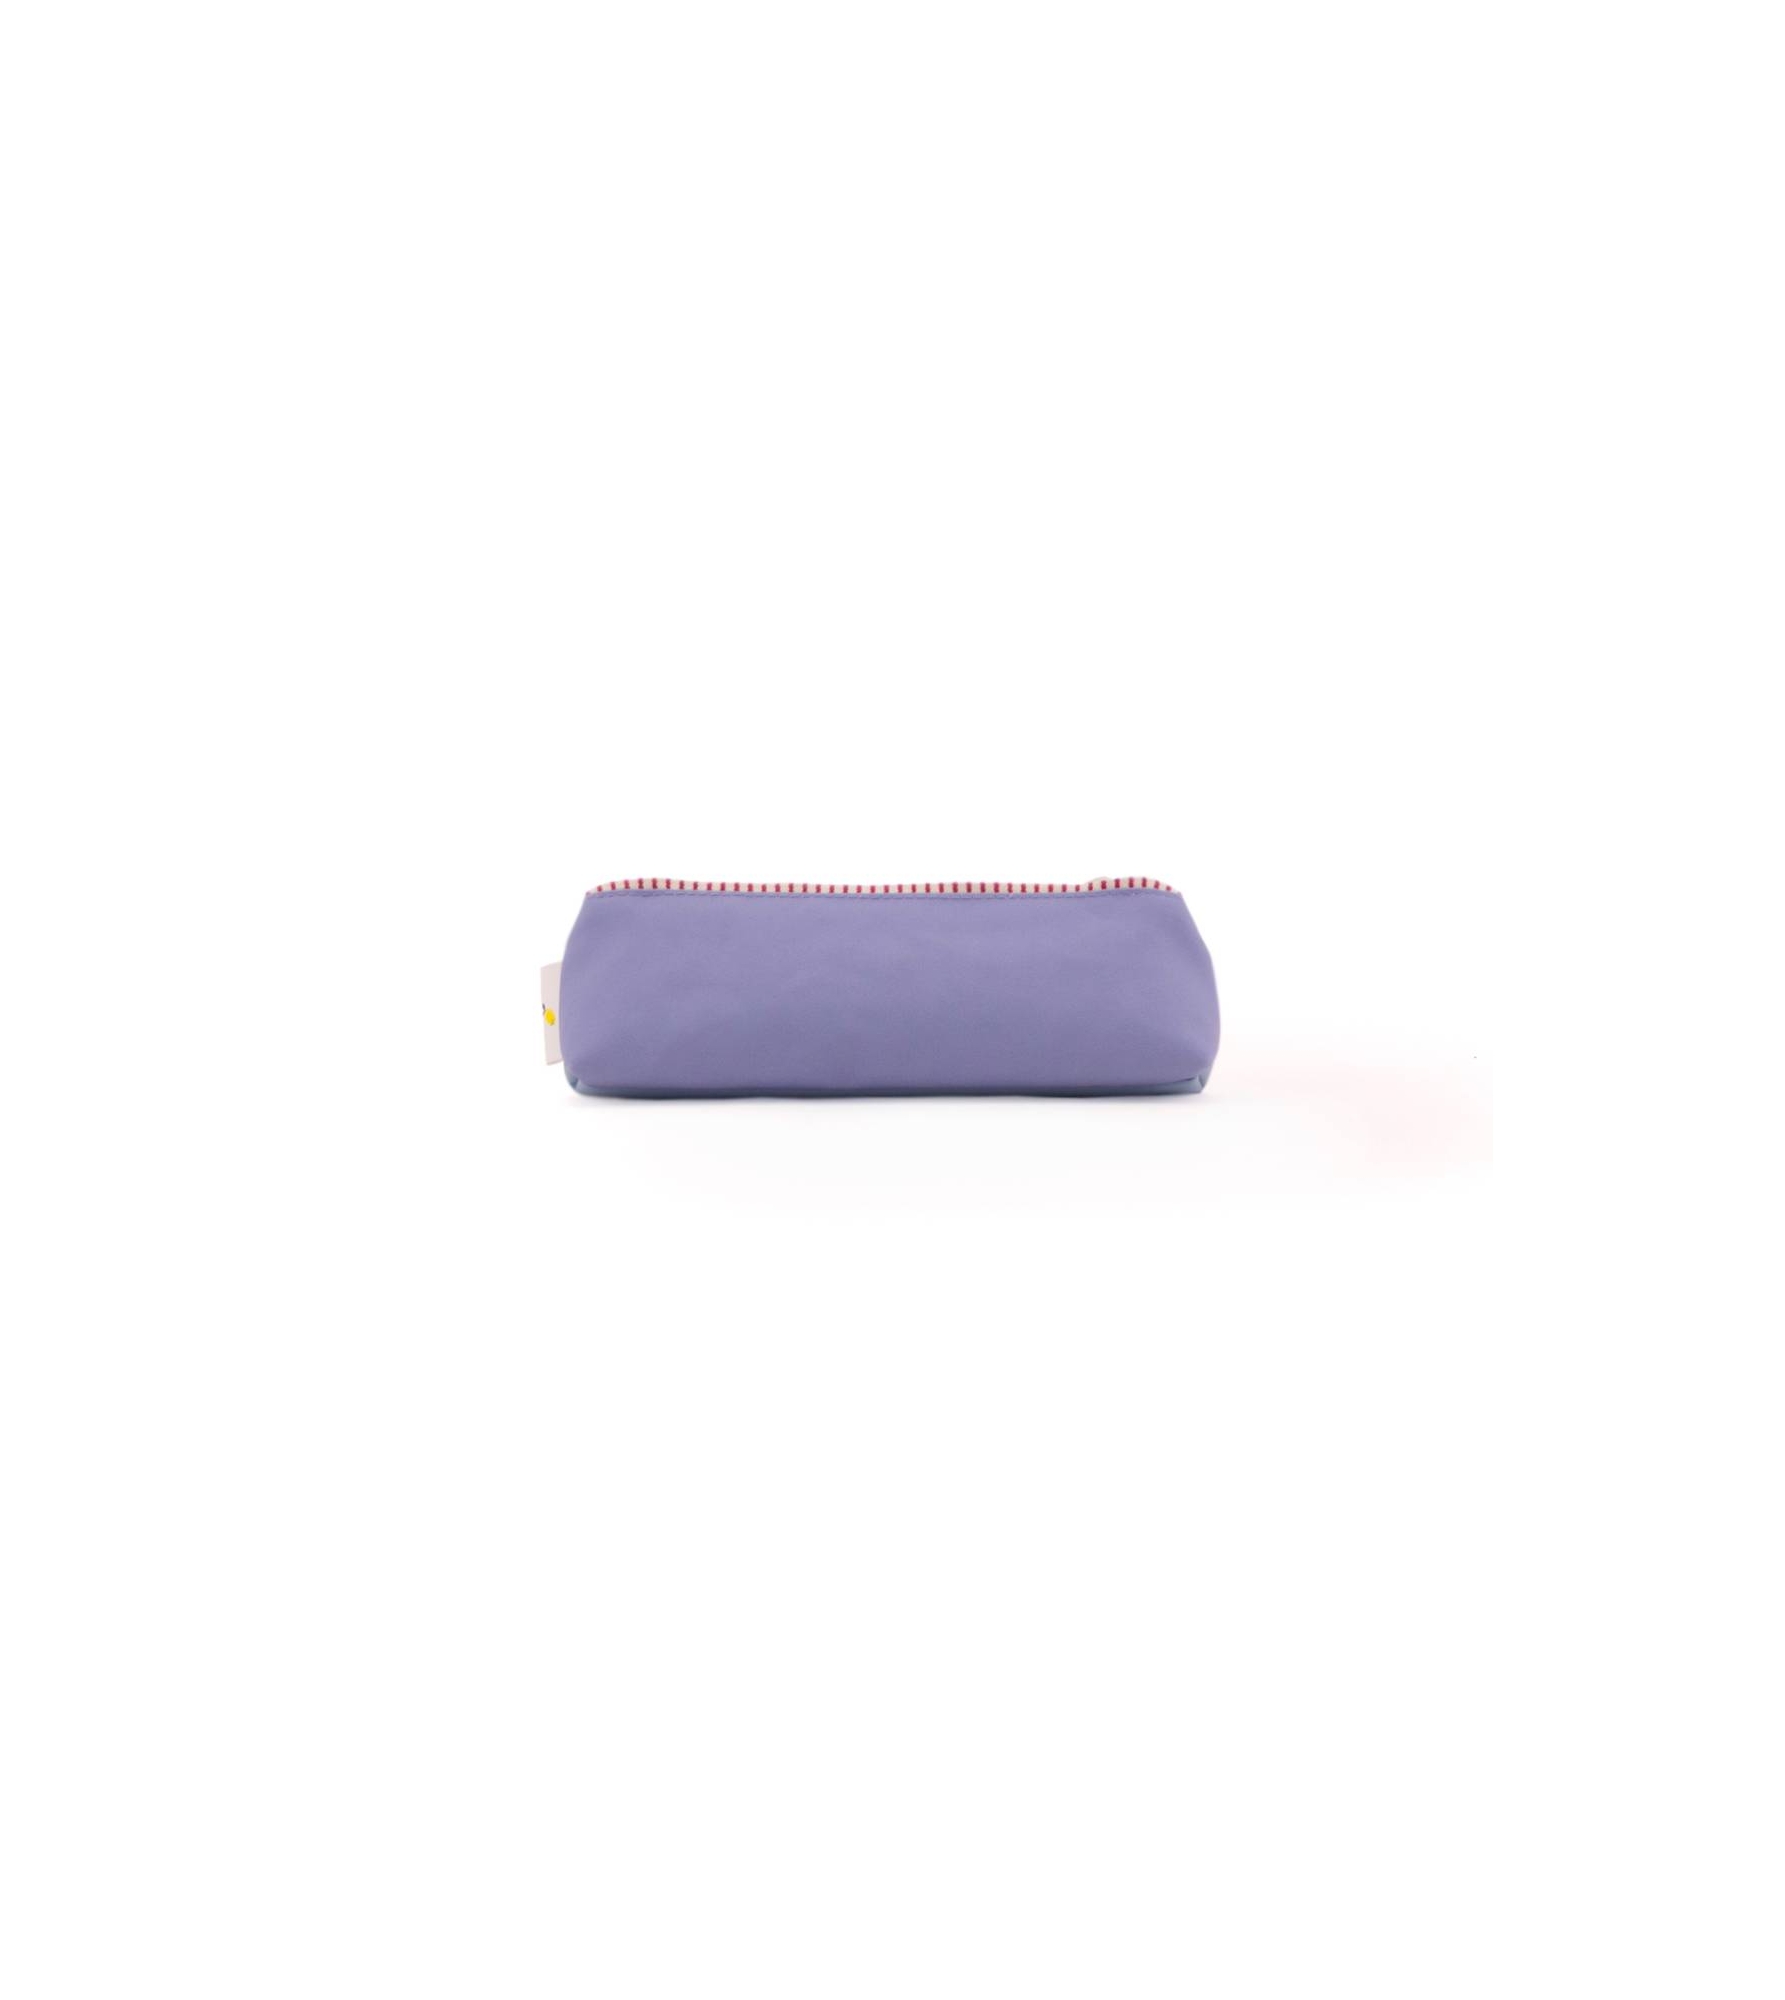 1801410 - Sticky Lemon - product - pencil case small - colour blocking - henckles blue + moustaf (1)_edit.jpg